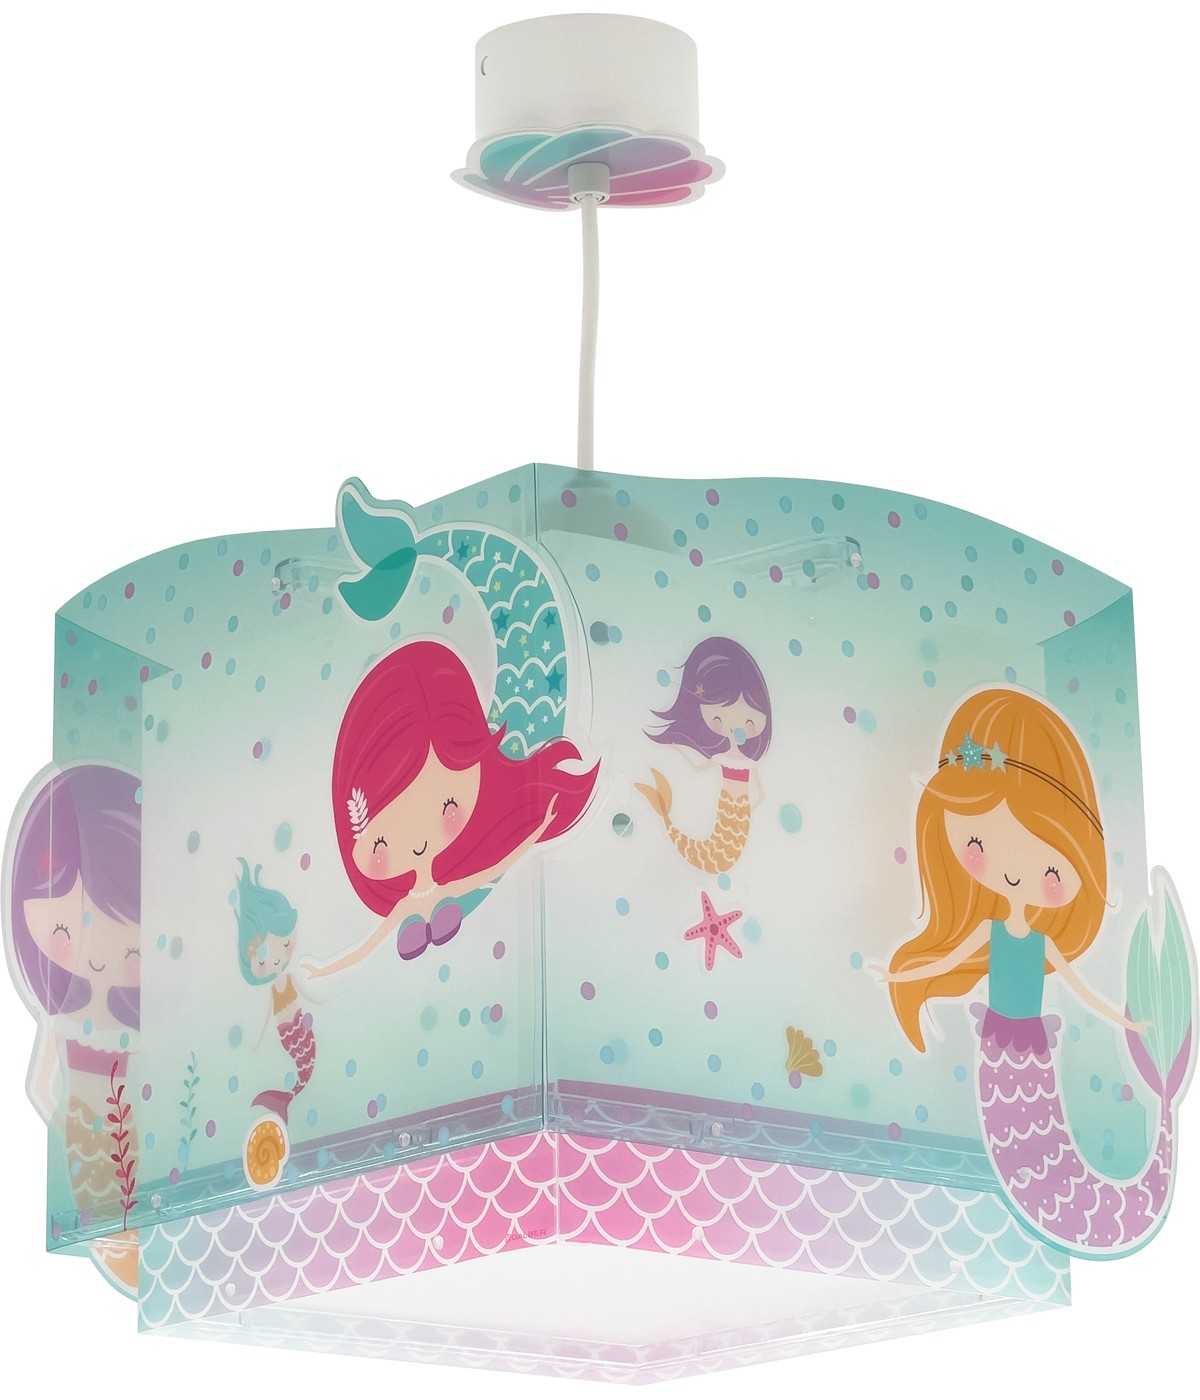 Children's hanging lamp Mermaids